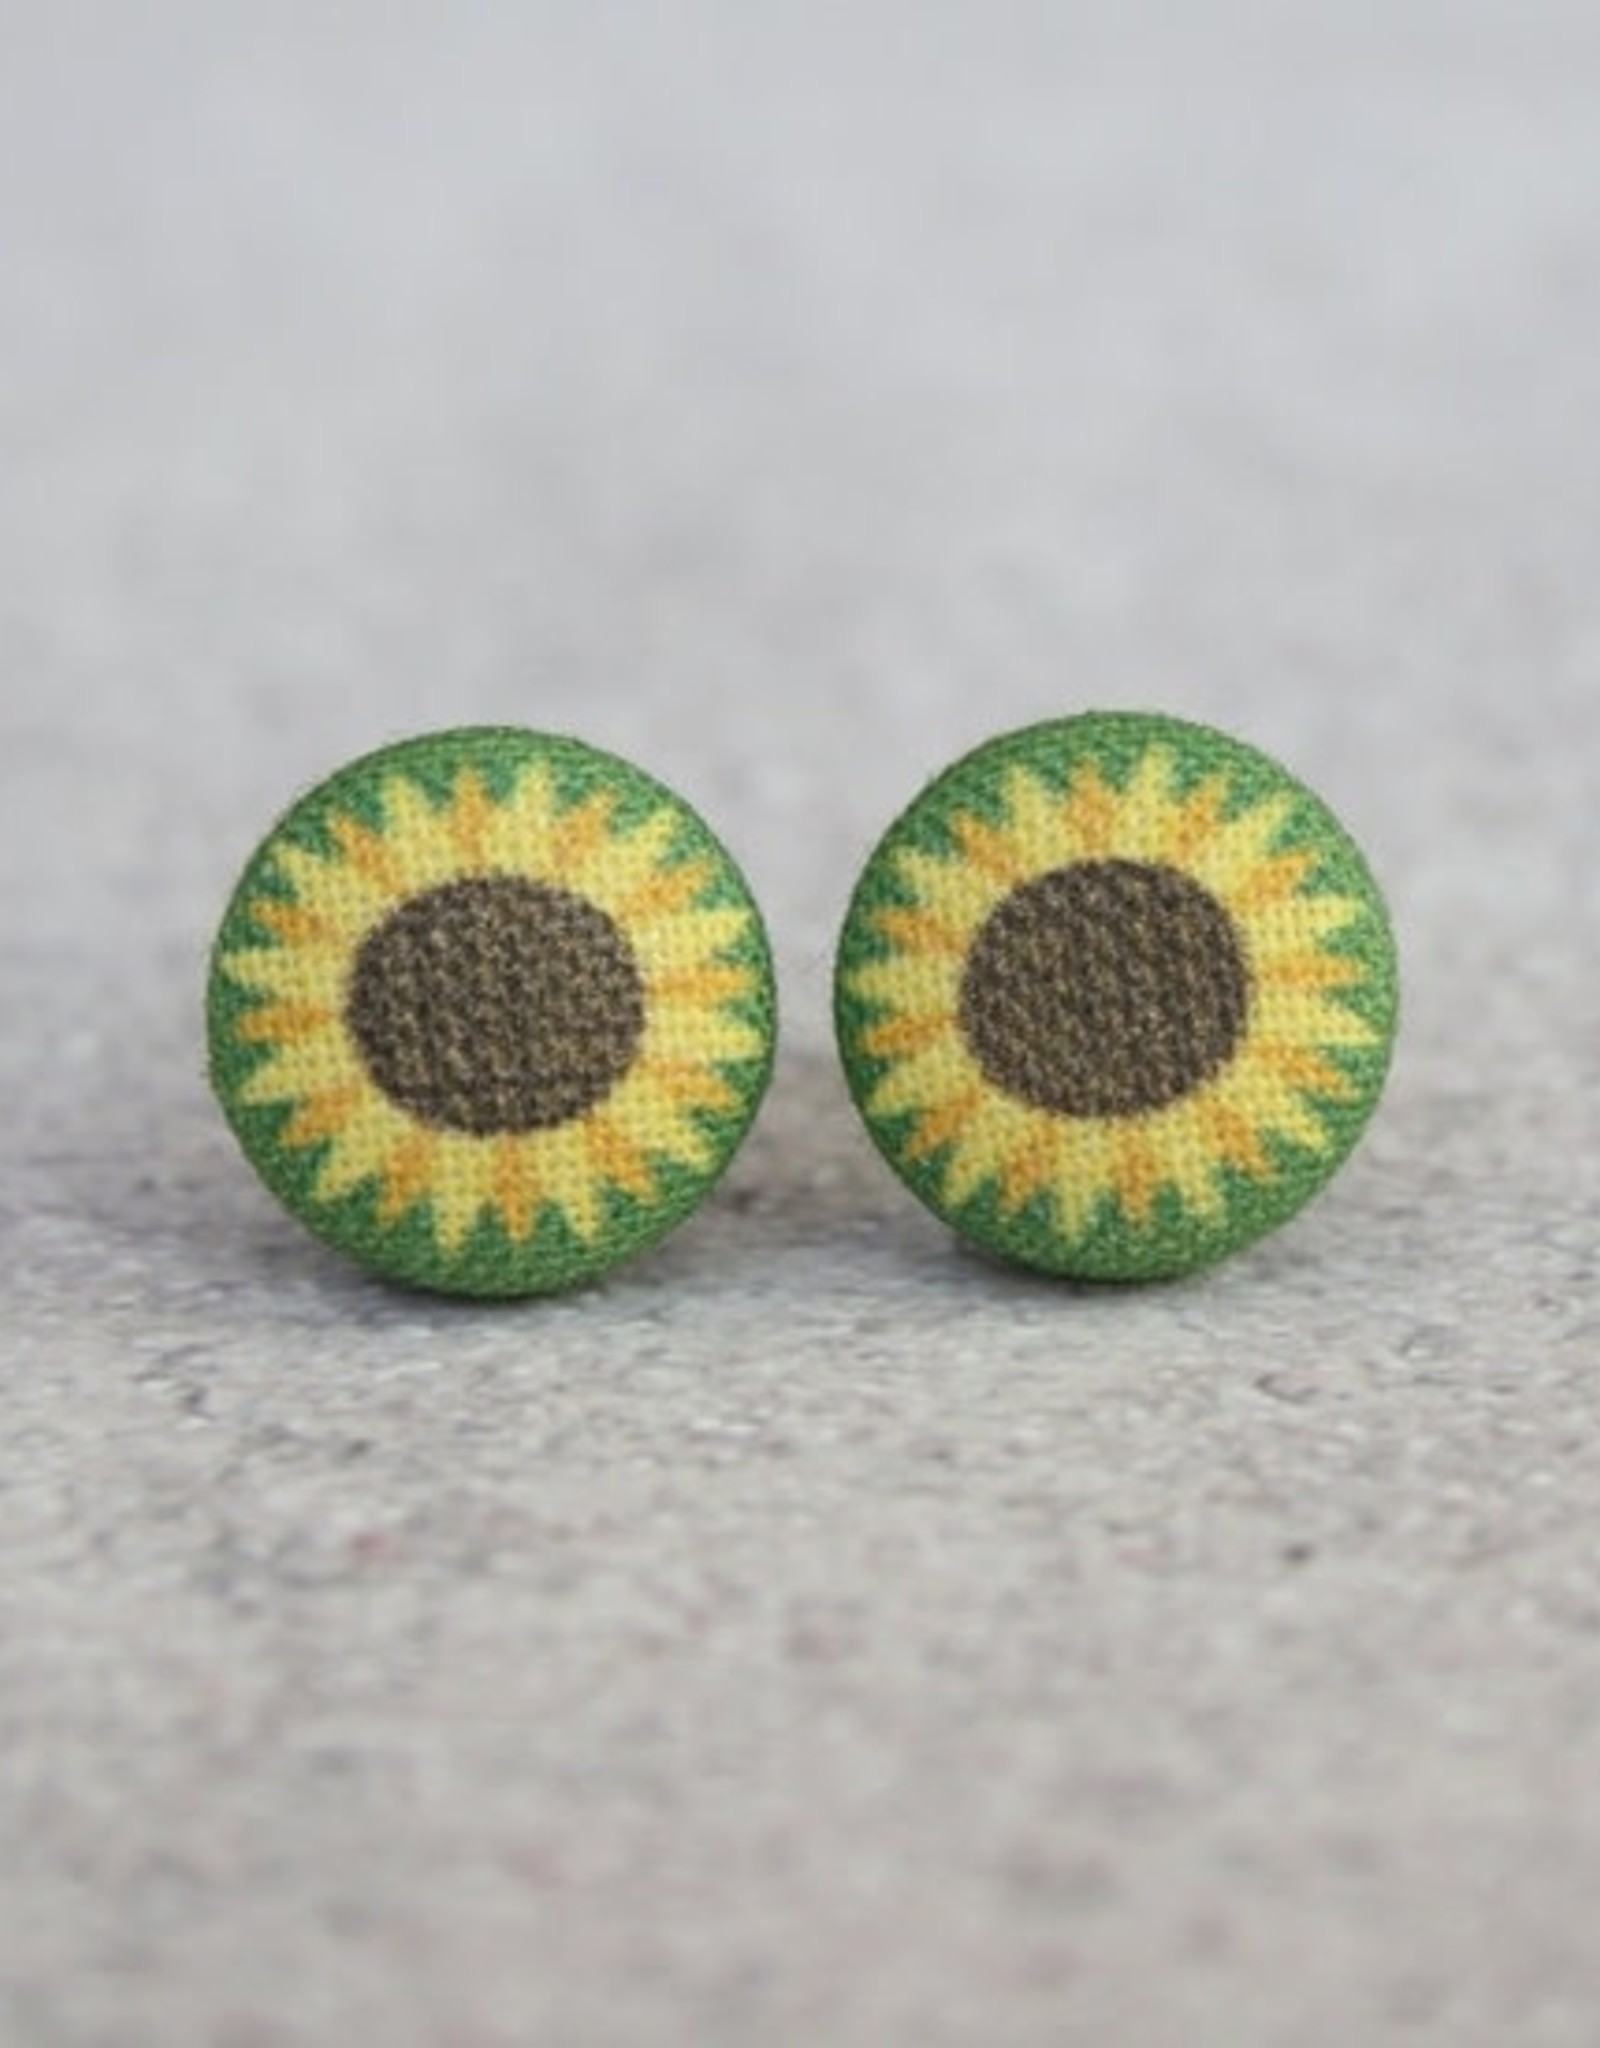 Rachel O's Fabric Button Earrings - Sunflower